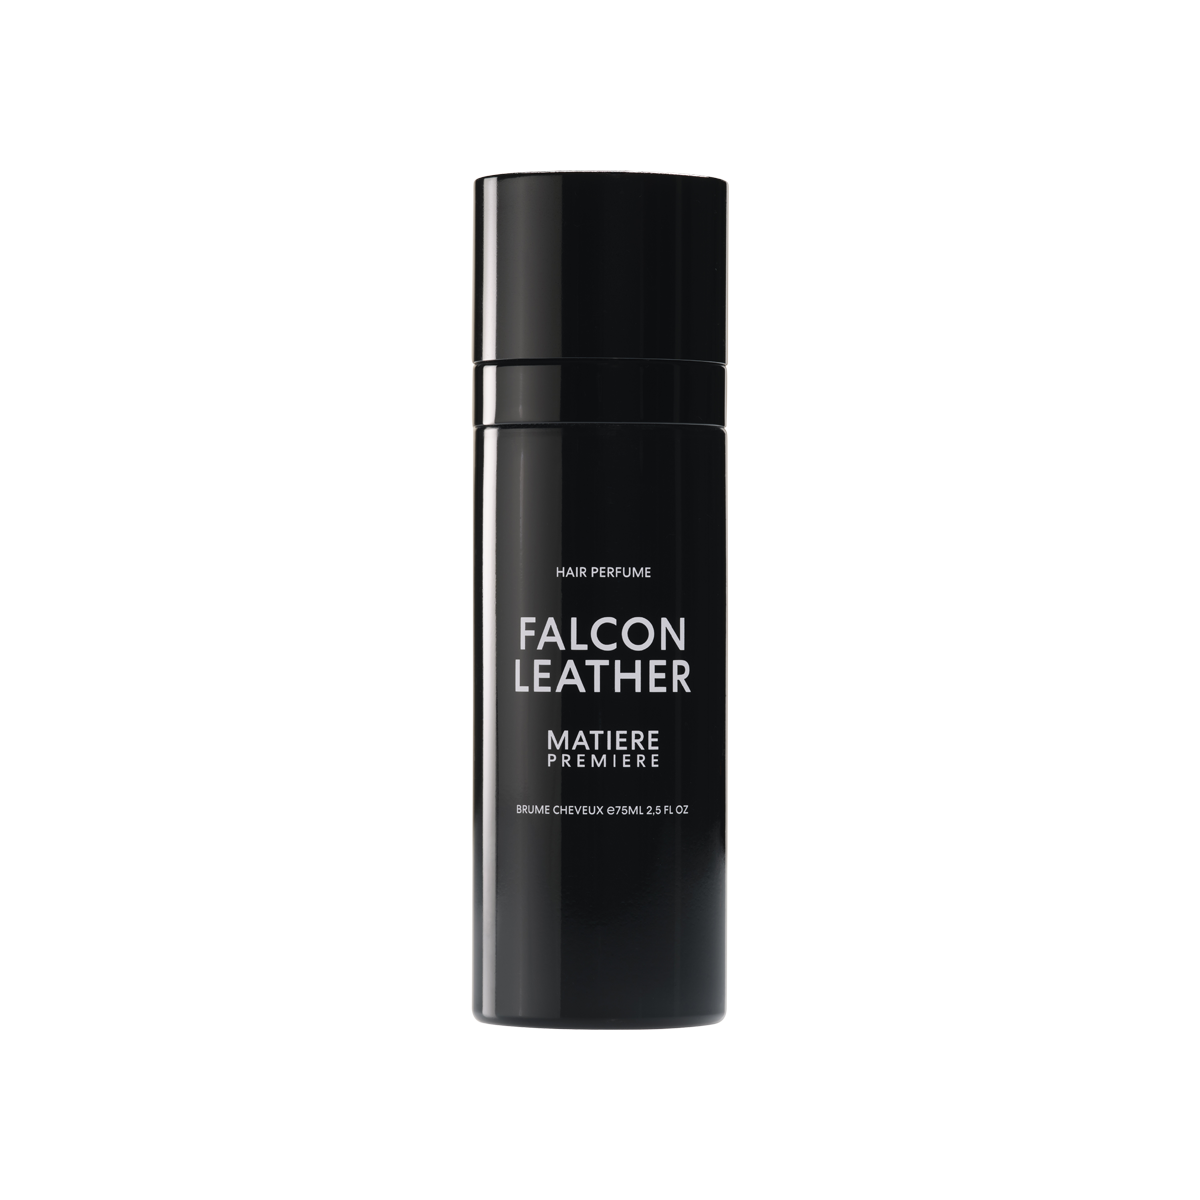 Matiere Premiere - Hair Perfume Falcon Leather